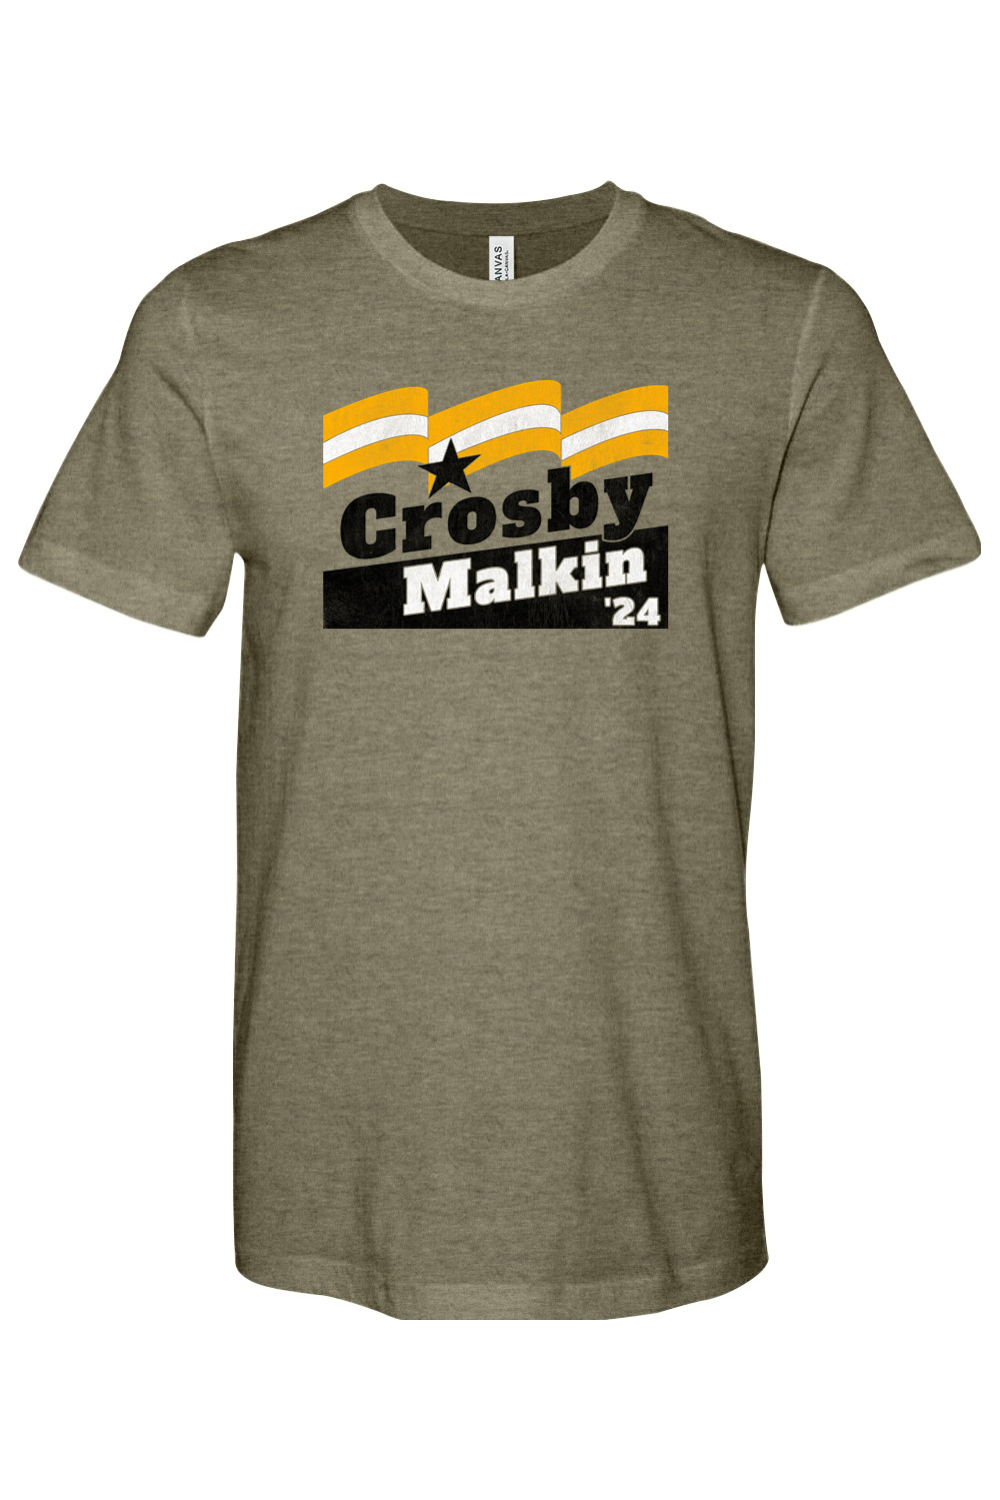 Crosby Malkin '24 - Yinzylvania